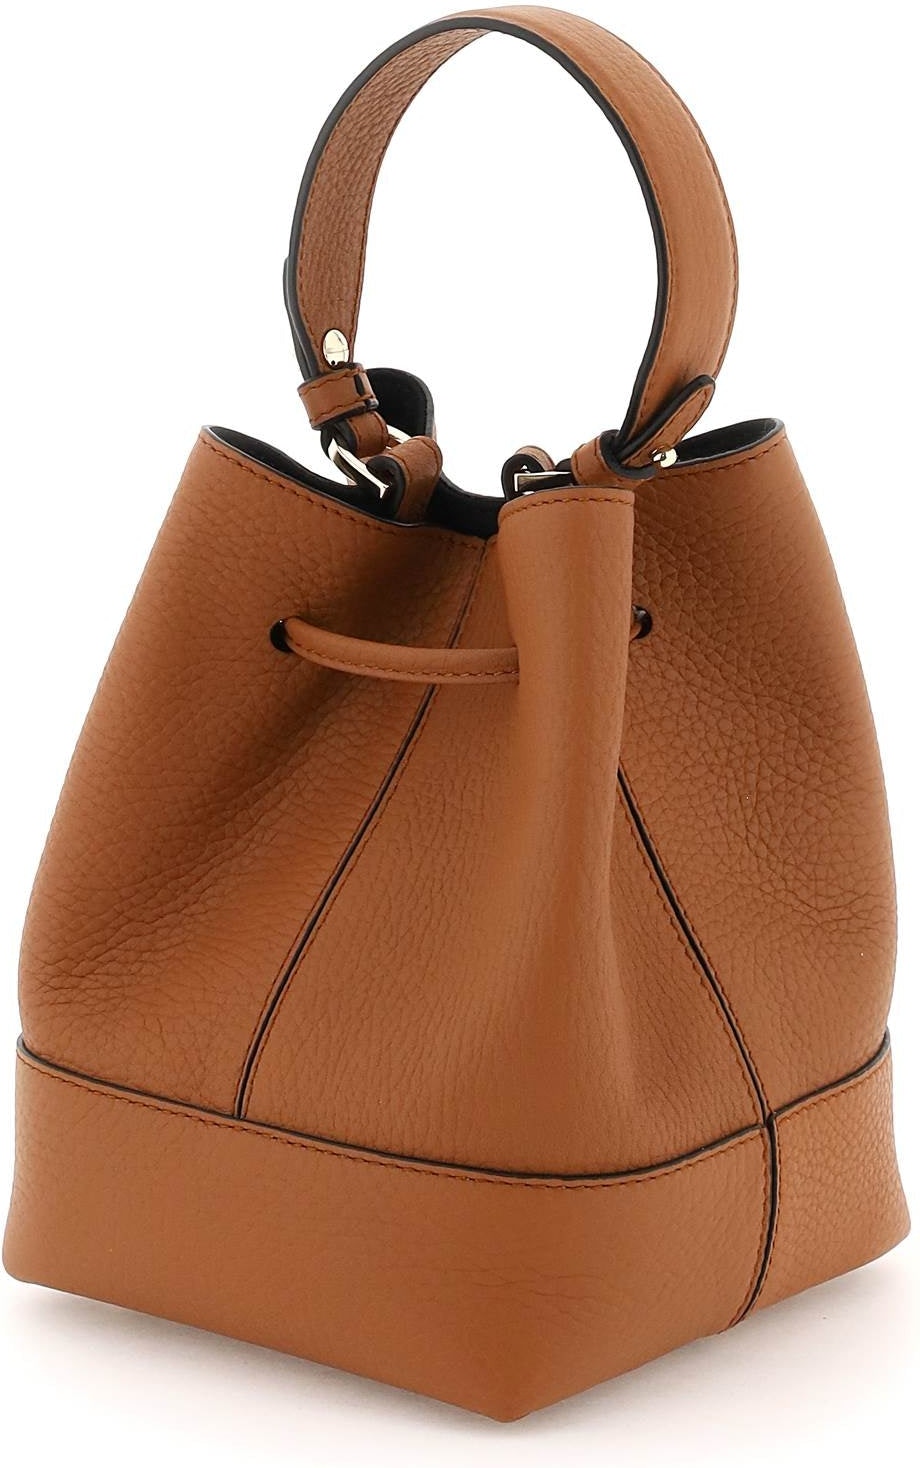 Strathberry Lana Osette Bucket Bag